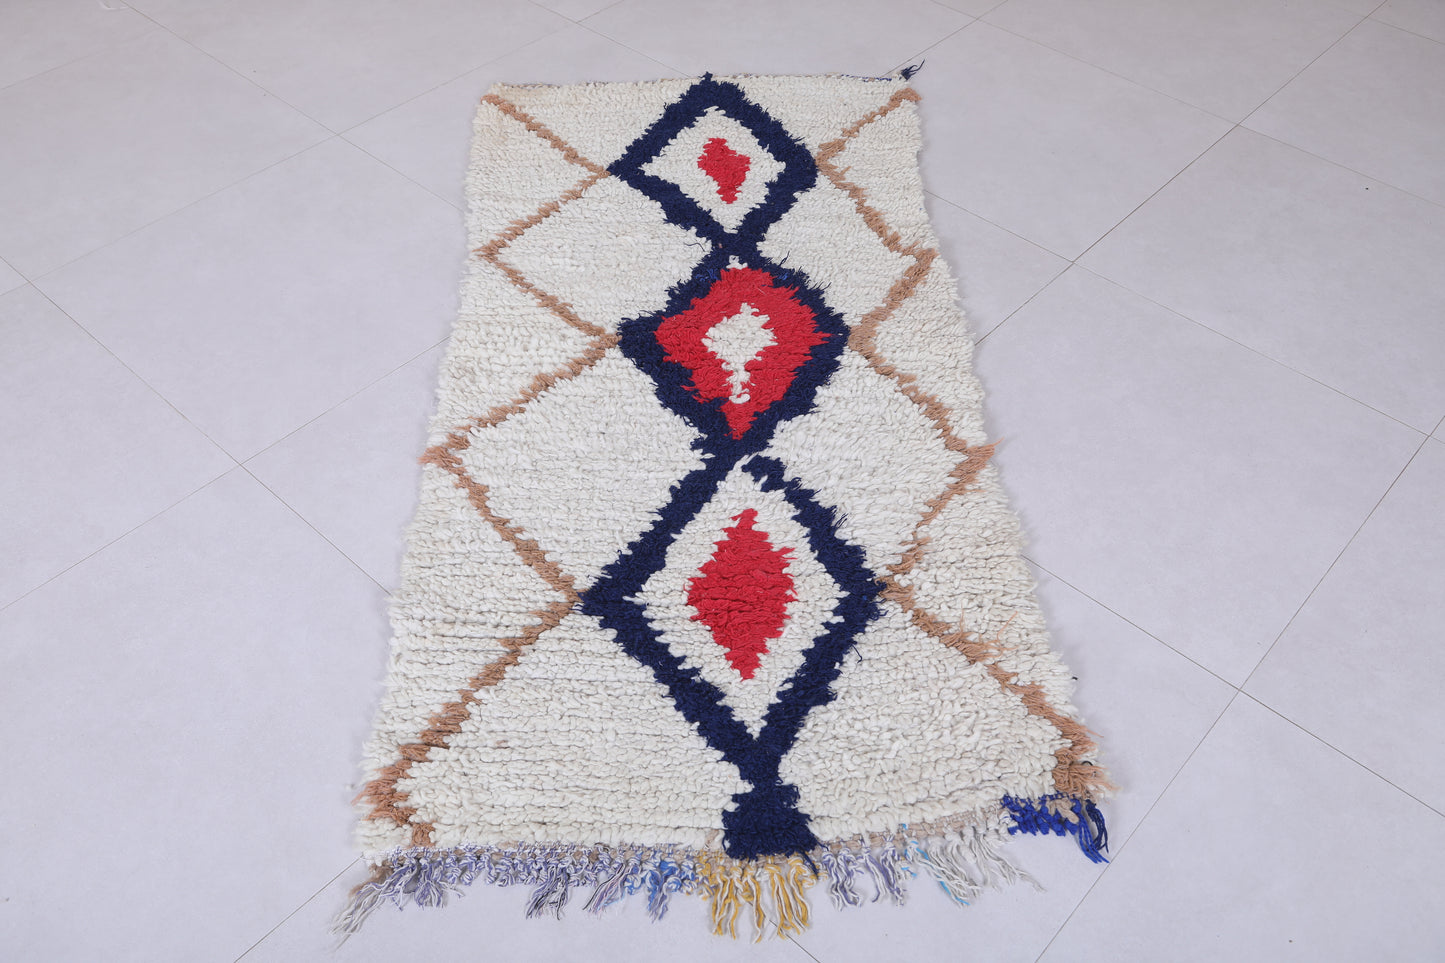 Moroccan berber rug 2.5 X 5.3 Feet